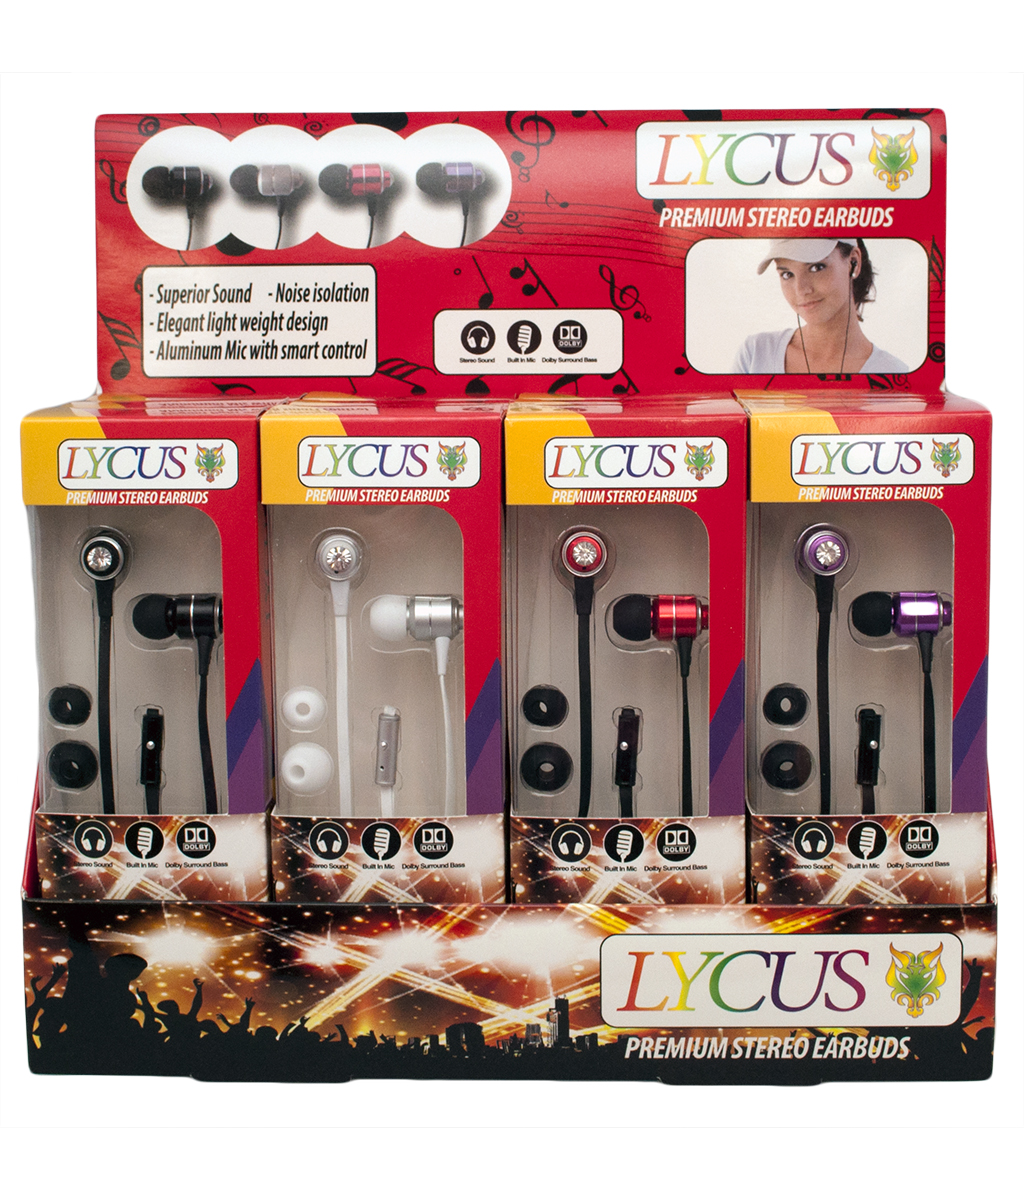 Lycus Premium Earbuds display